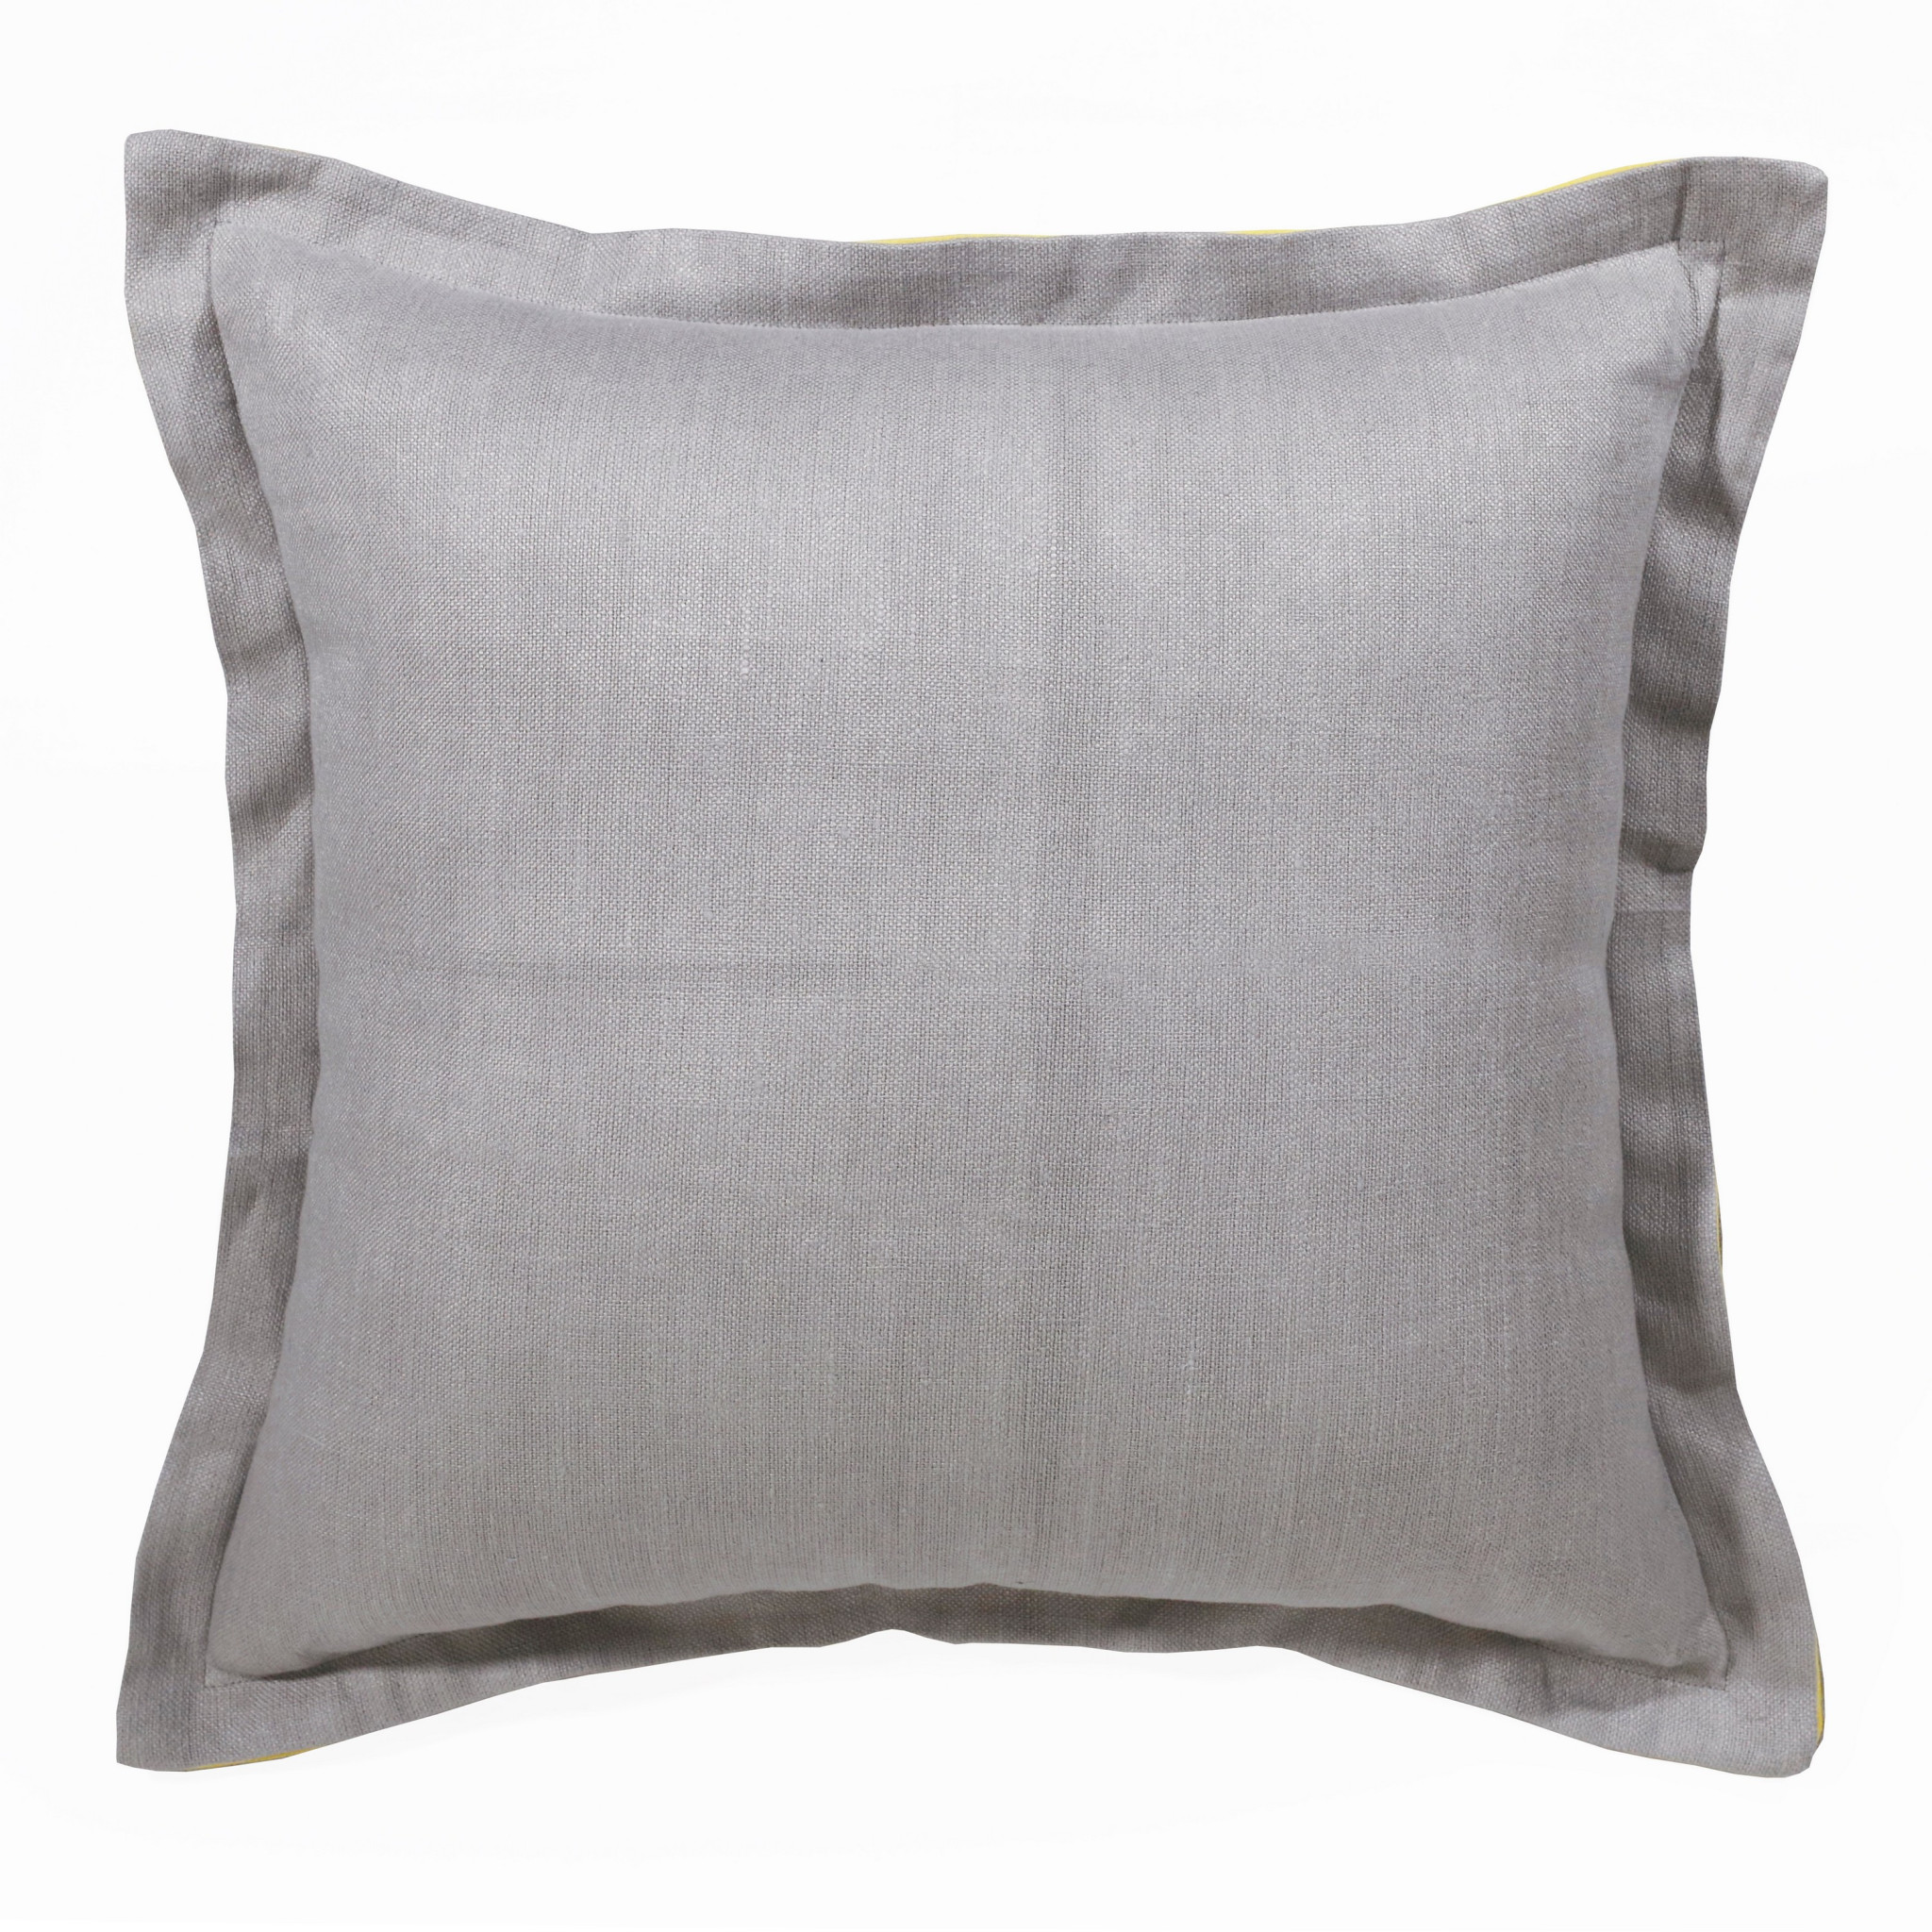 20" X 20" Gray And Yellow Linen Zippered Pillow-516988-1